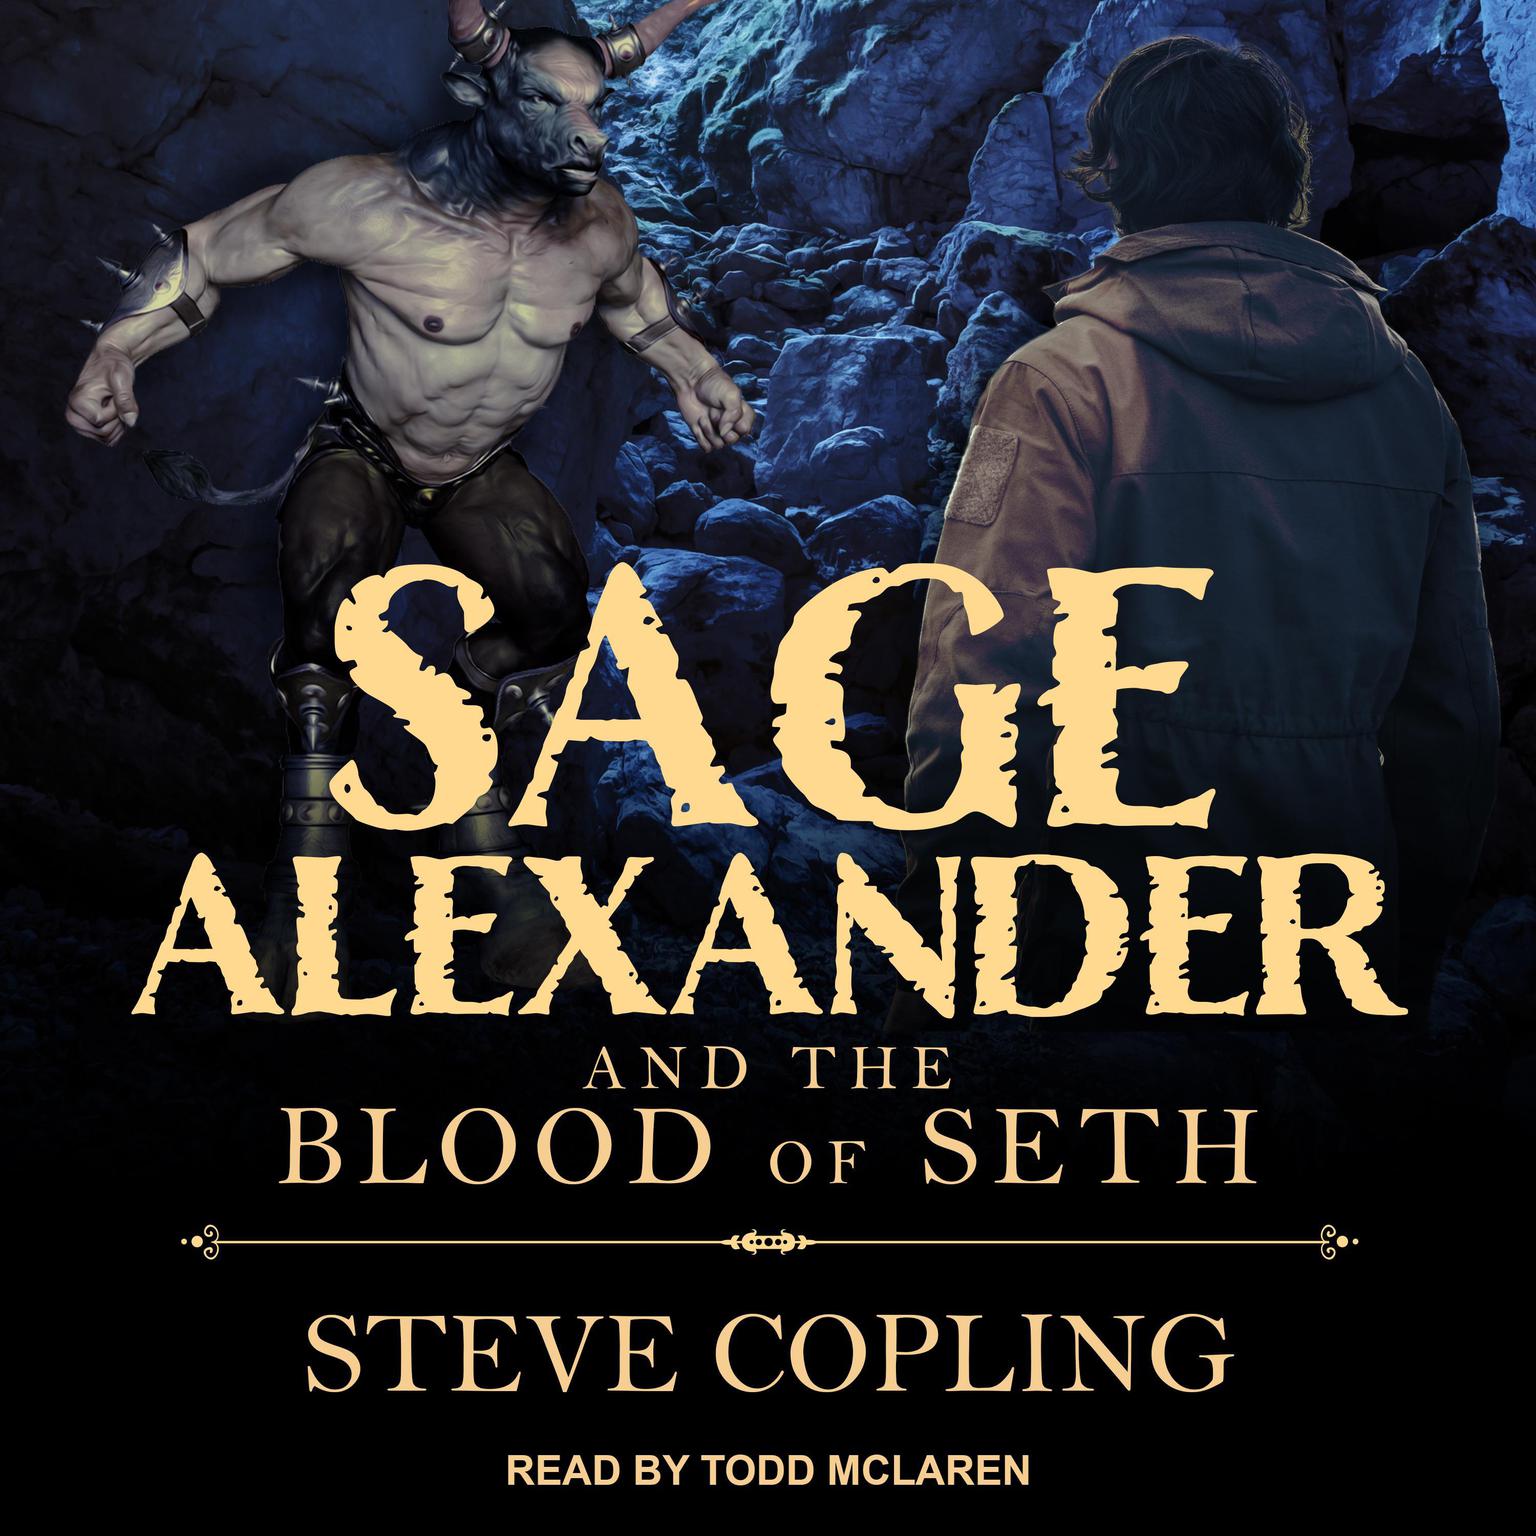 Sage Alexander and the Blood of Seth Audiobook, by Steve Copling